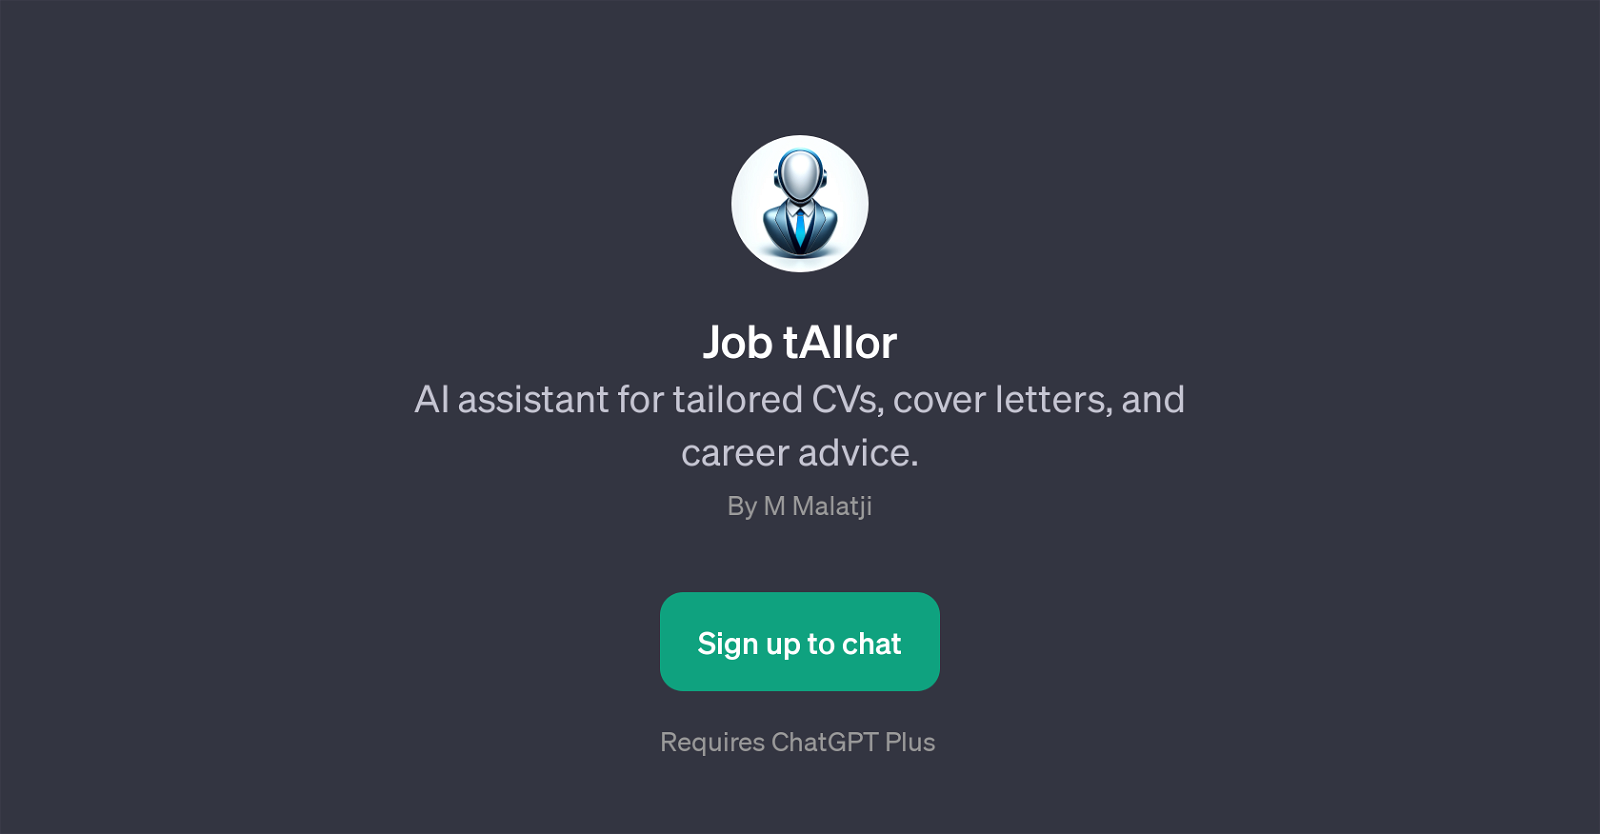 Job tAIlor website